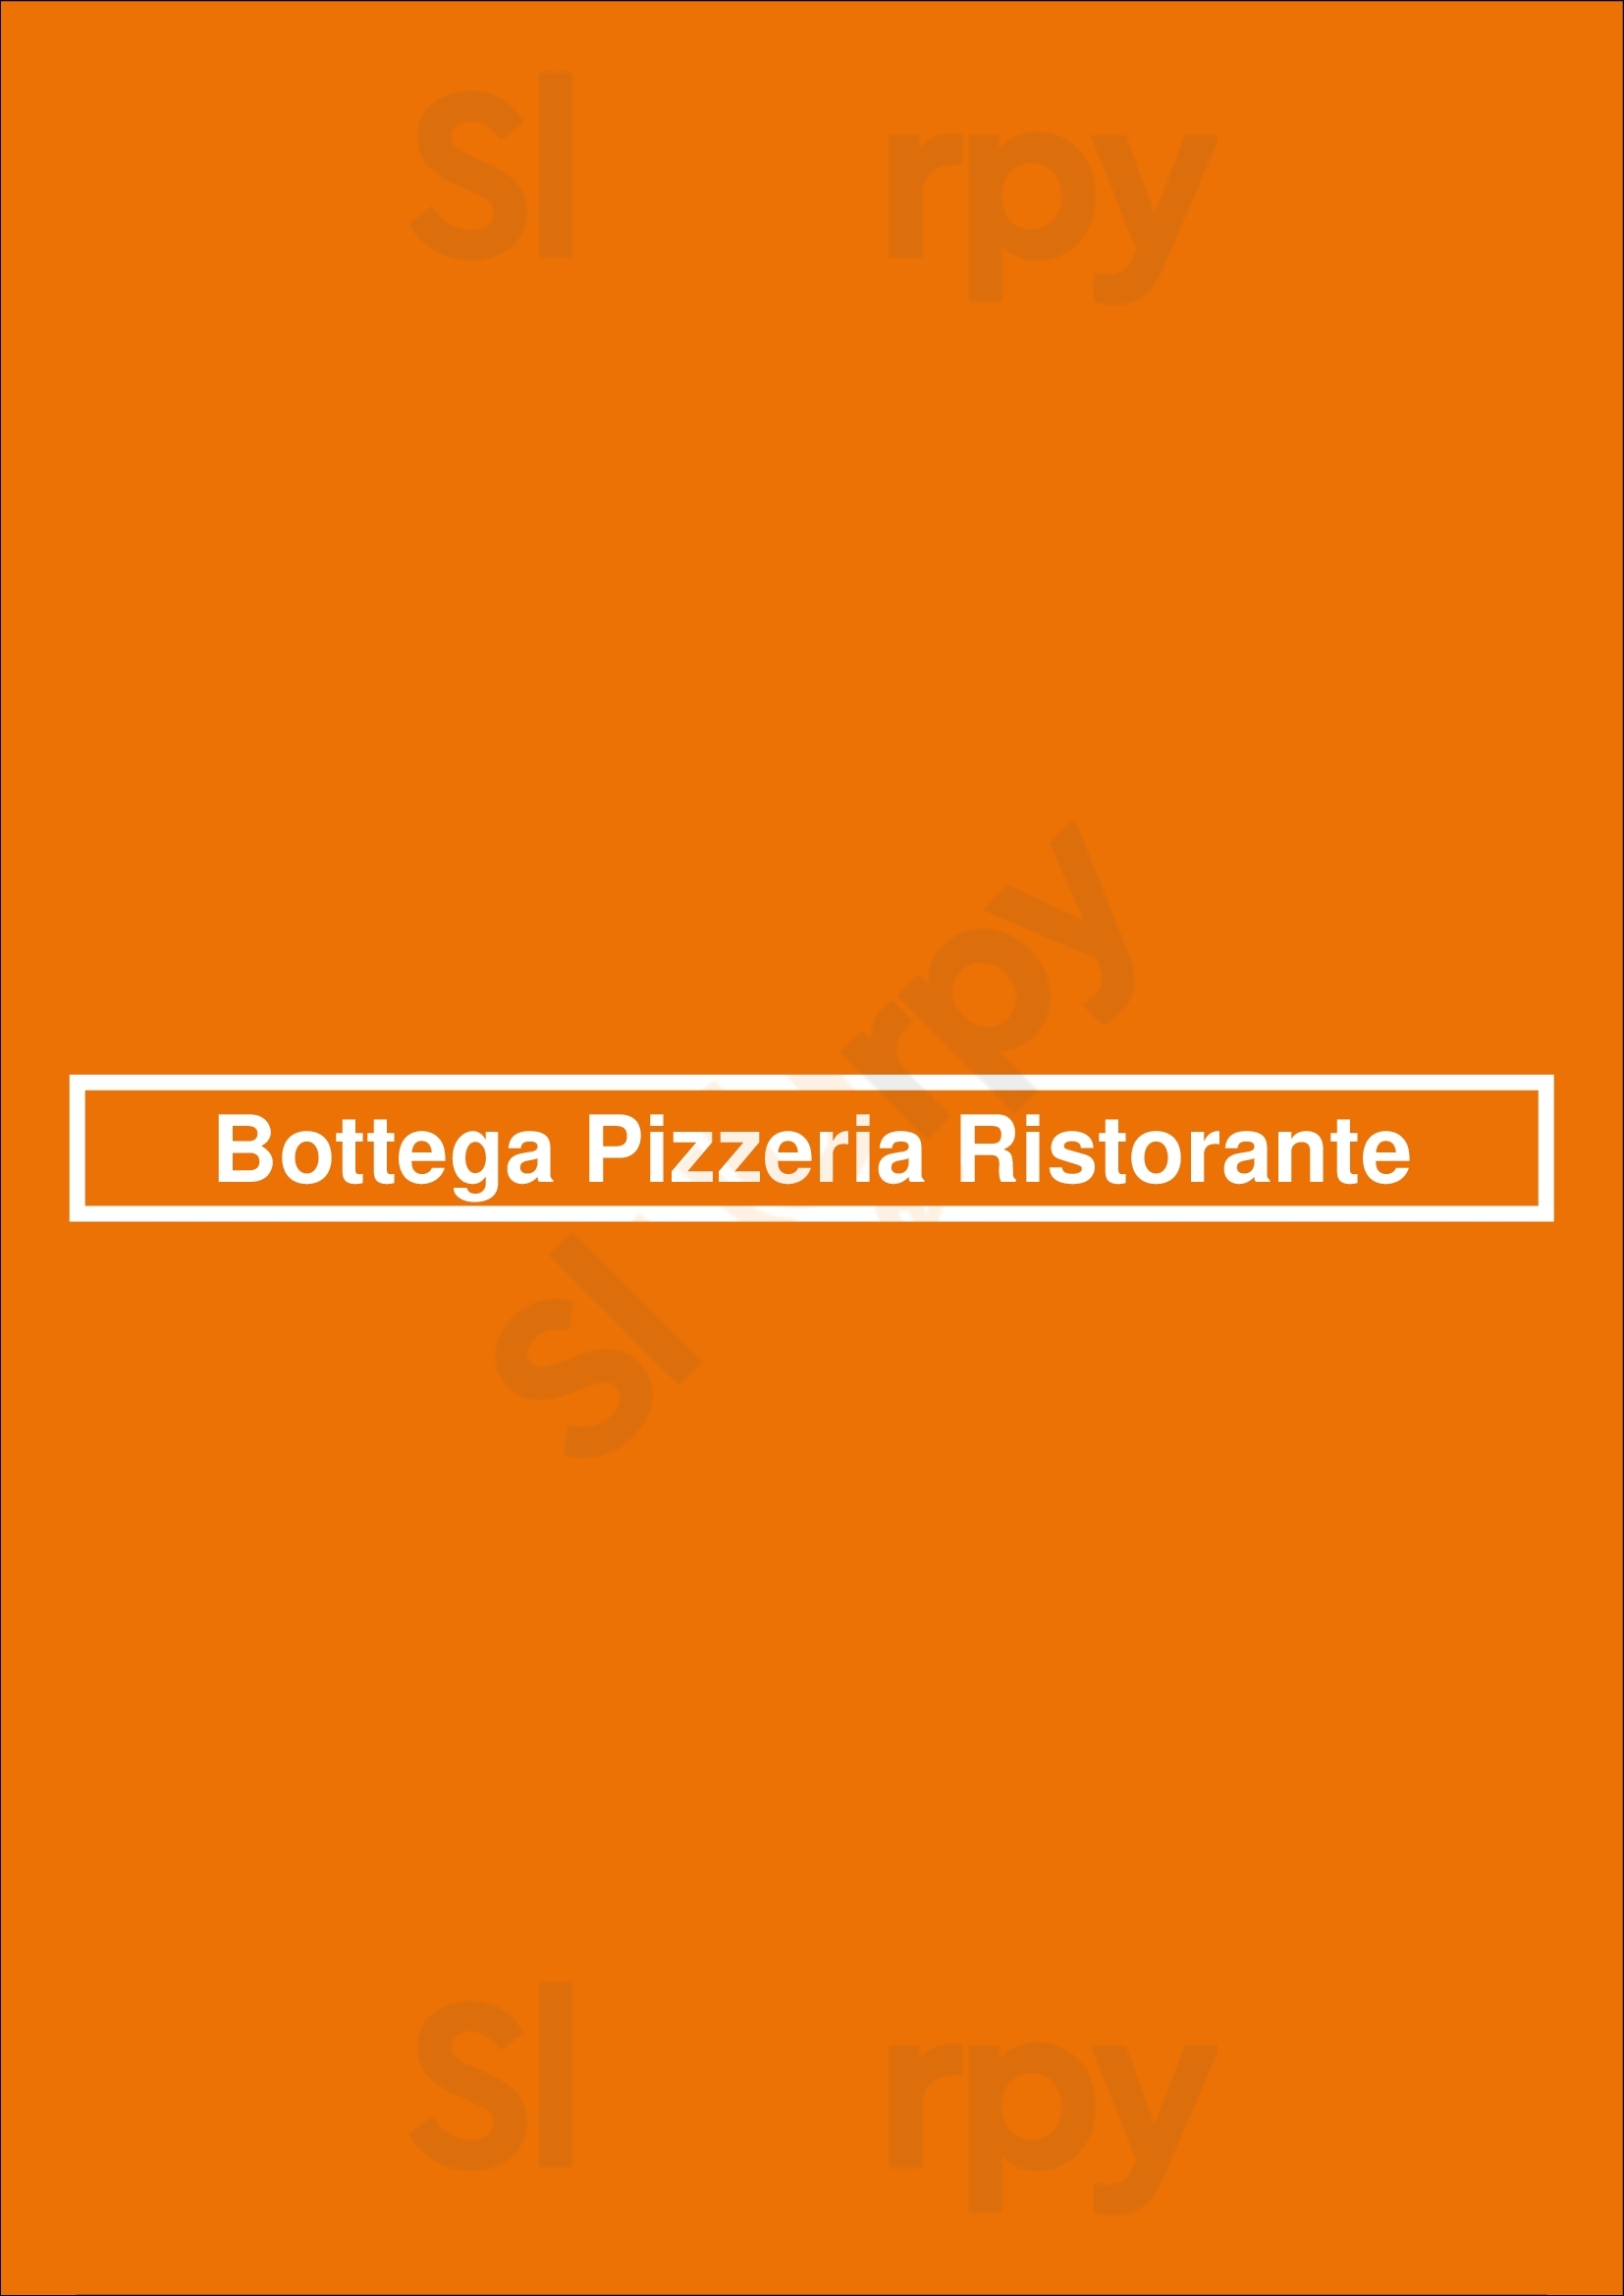 Bottega Pizzeria Ristorante Glendale Menu - 1